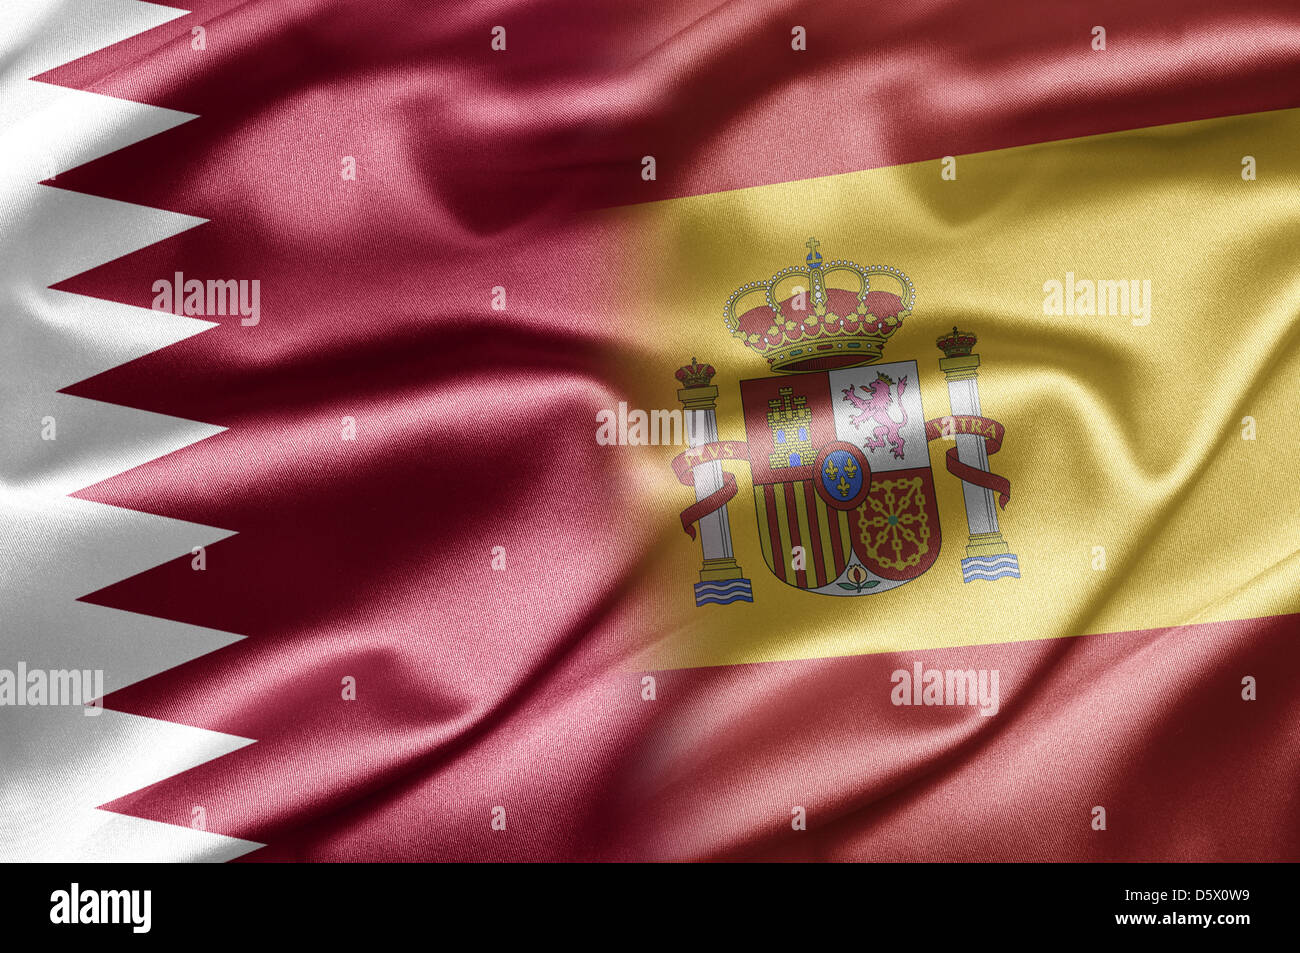 Qatar and Spain Stock Photo